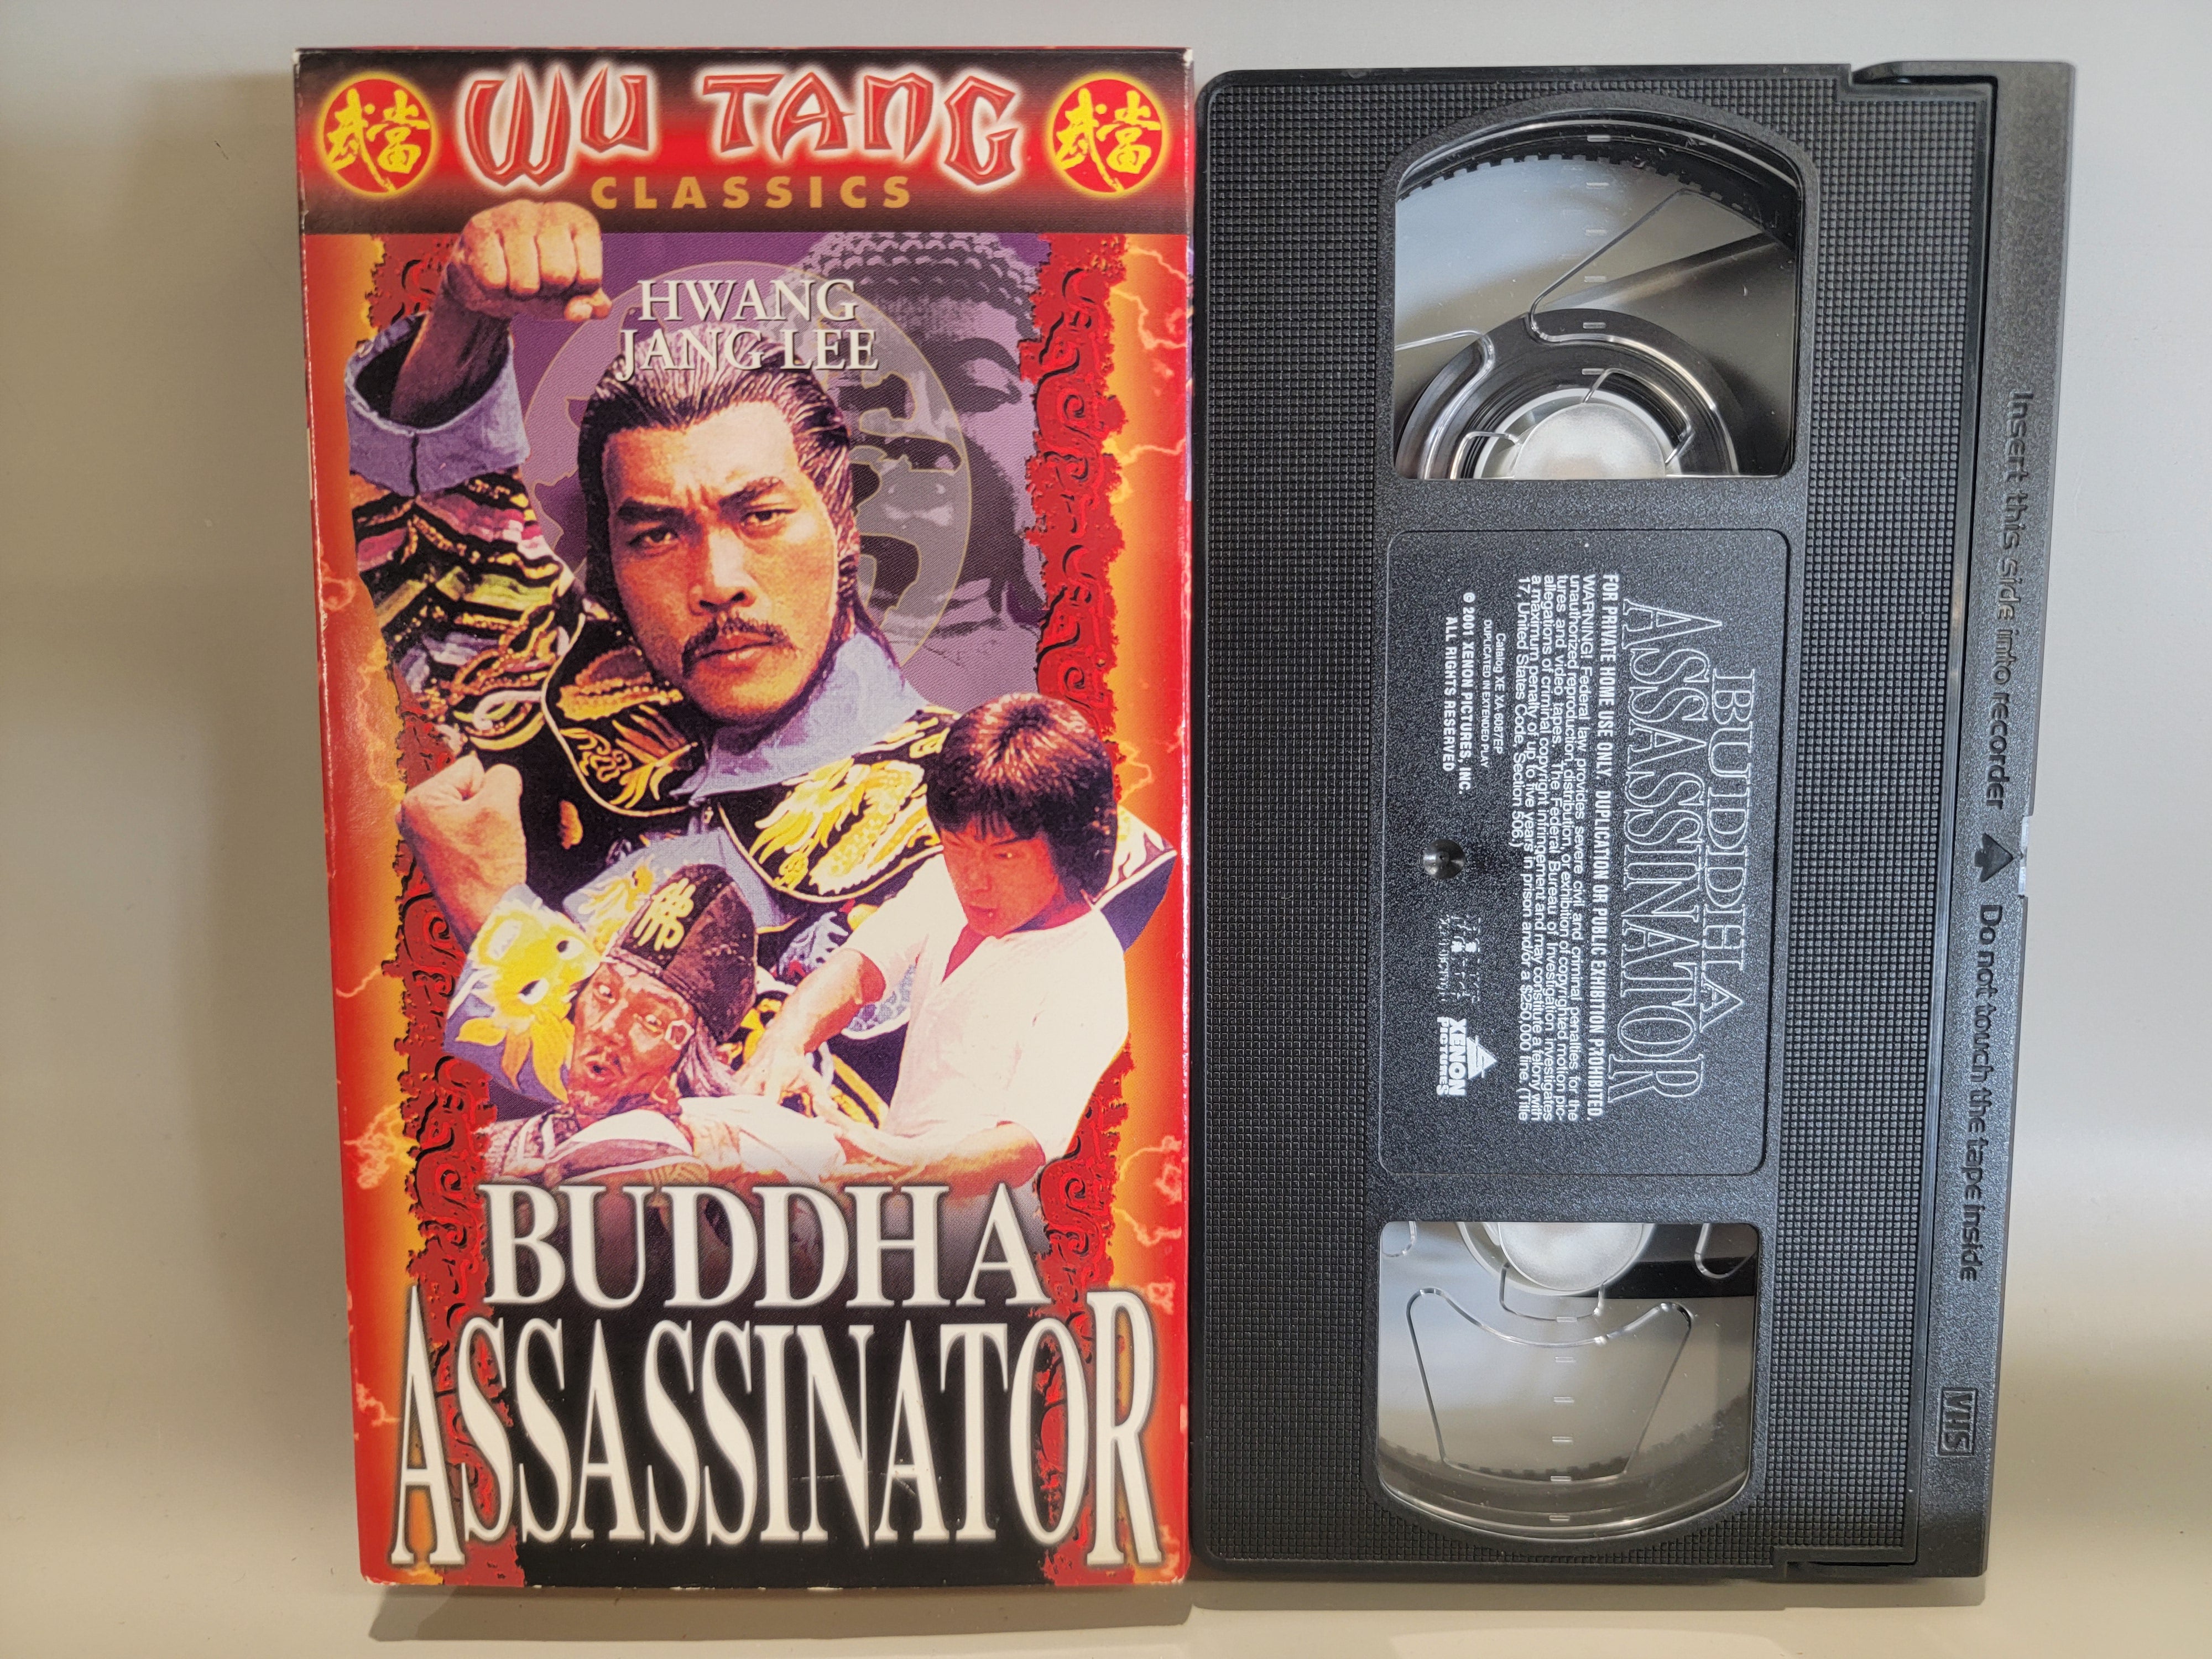 BUDDHA ASSASSINATOR VHS [USED]